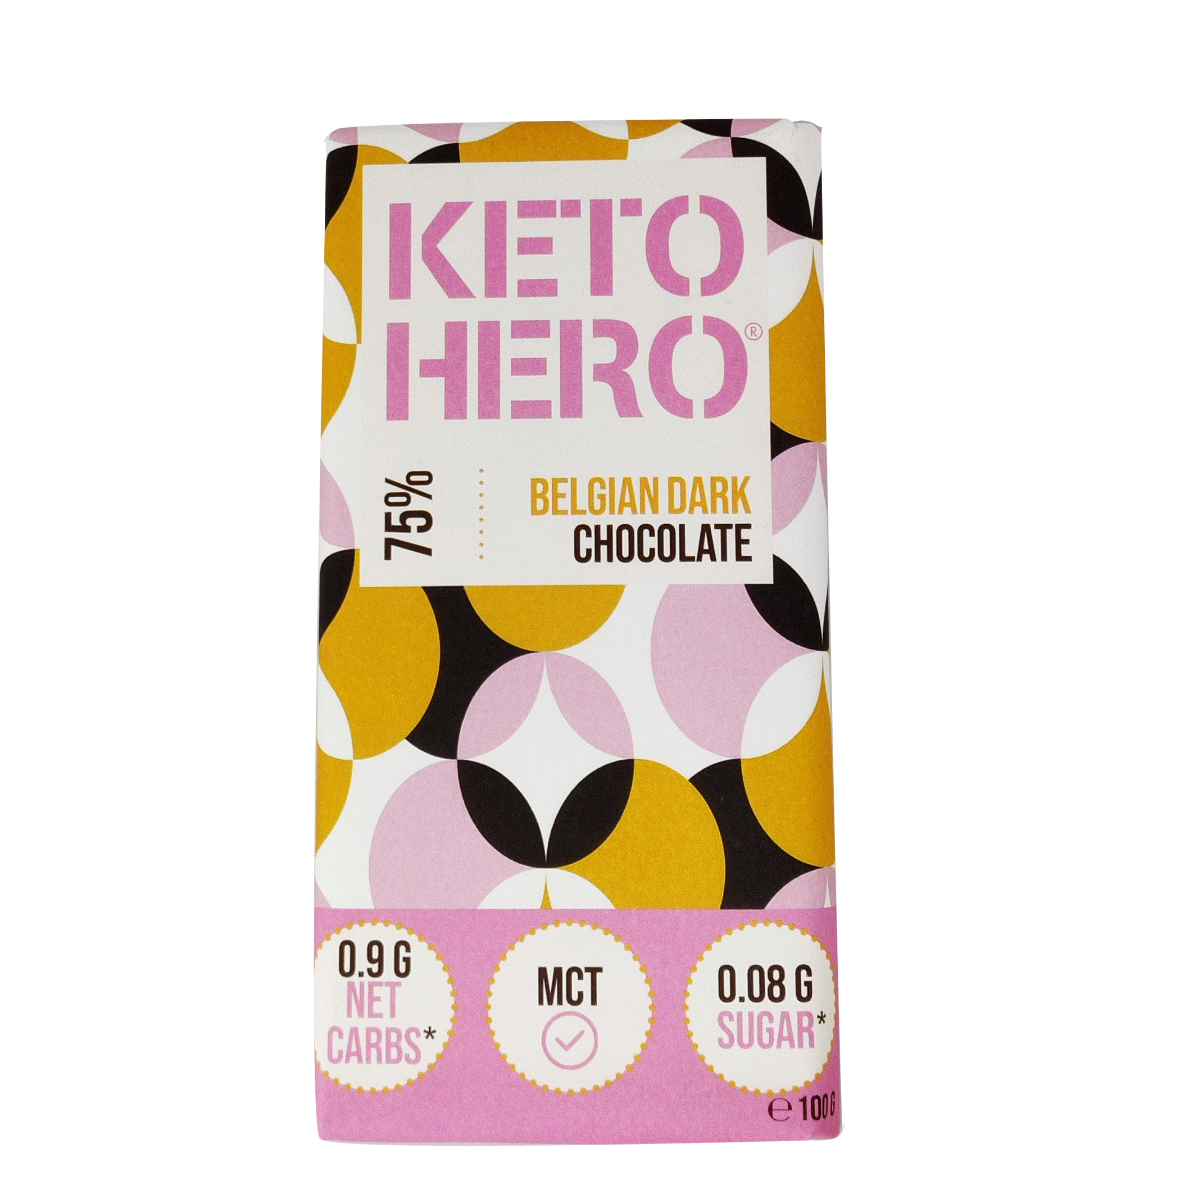 KETO-HERO 75% Belgisk Mörkchoklad 100g